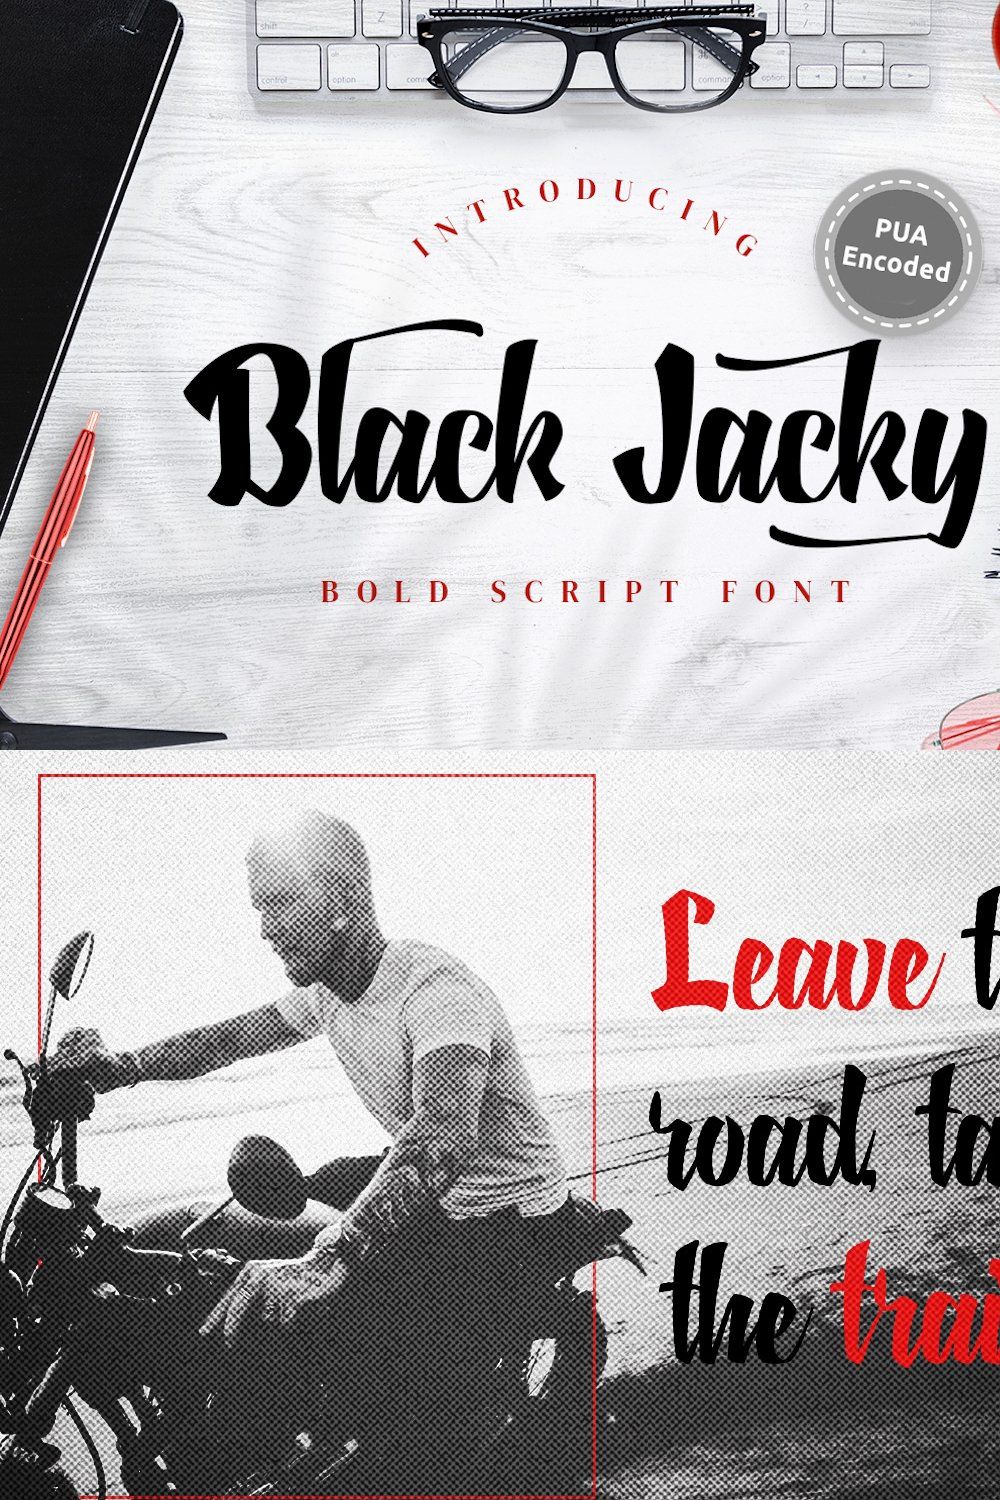 Black Jacky - Bold Script Font pinterest preview image.